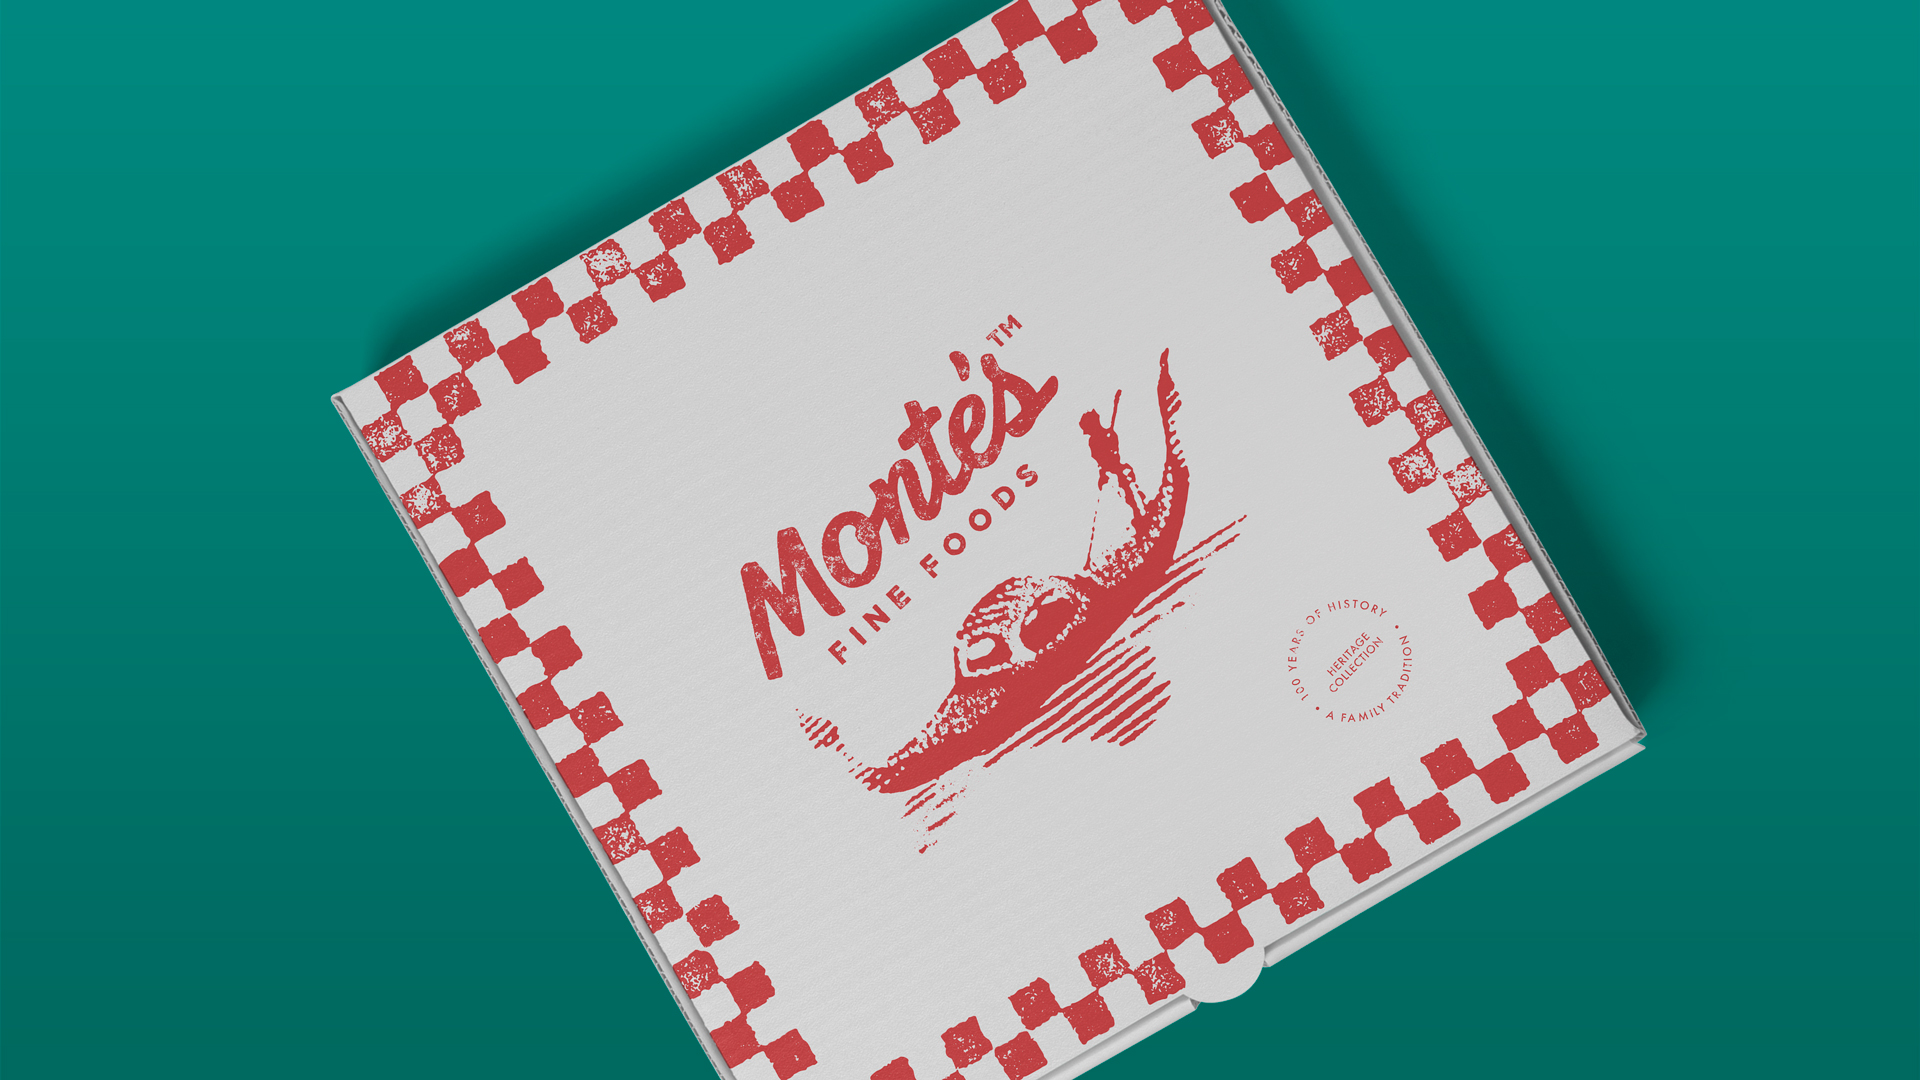 Montes_pizzabox_mockup_02